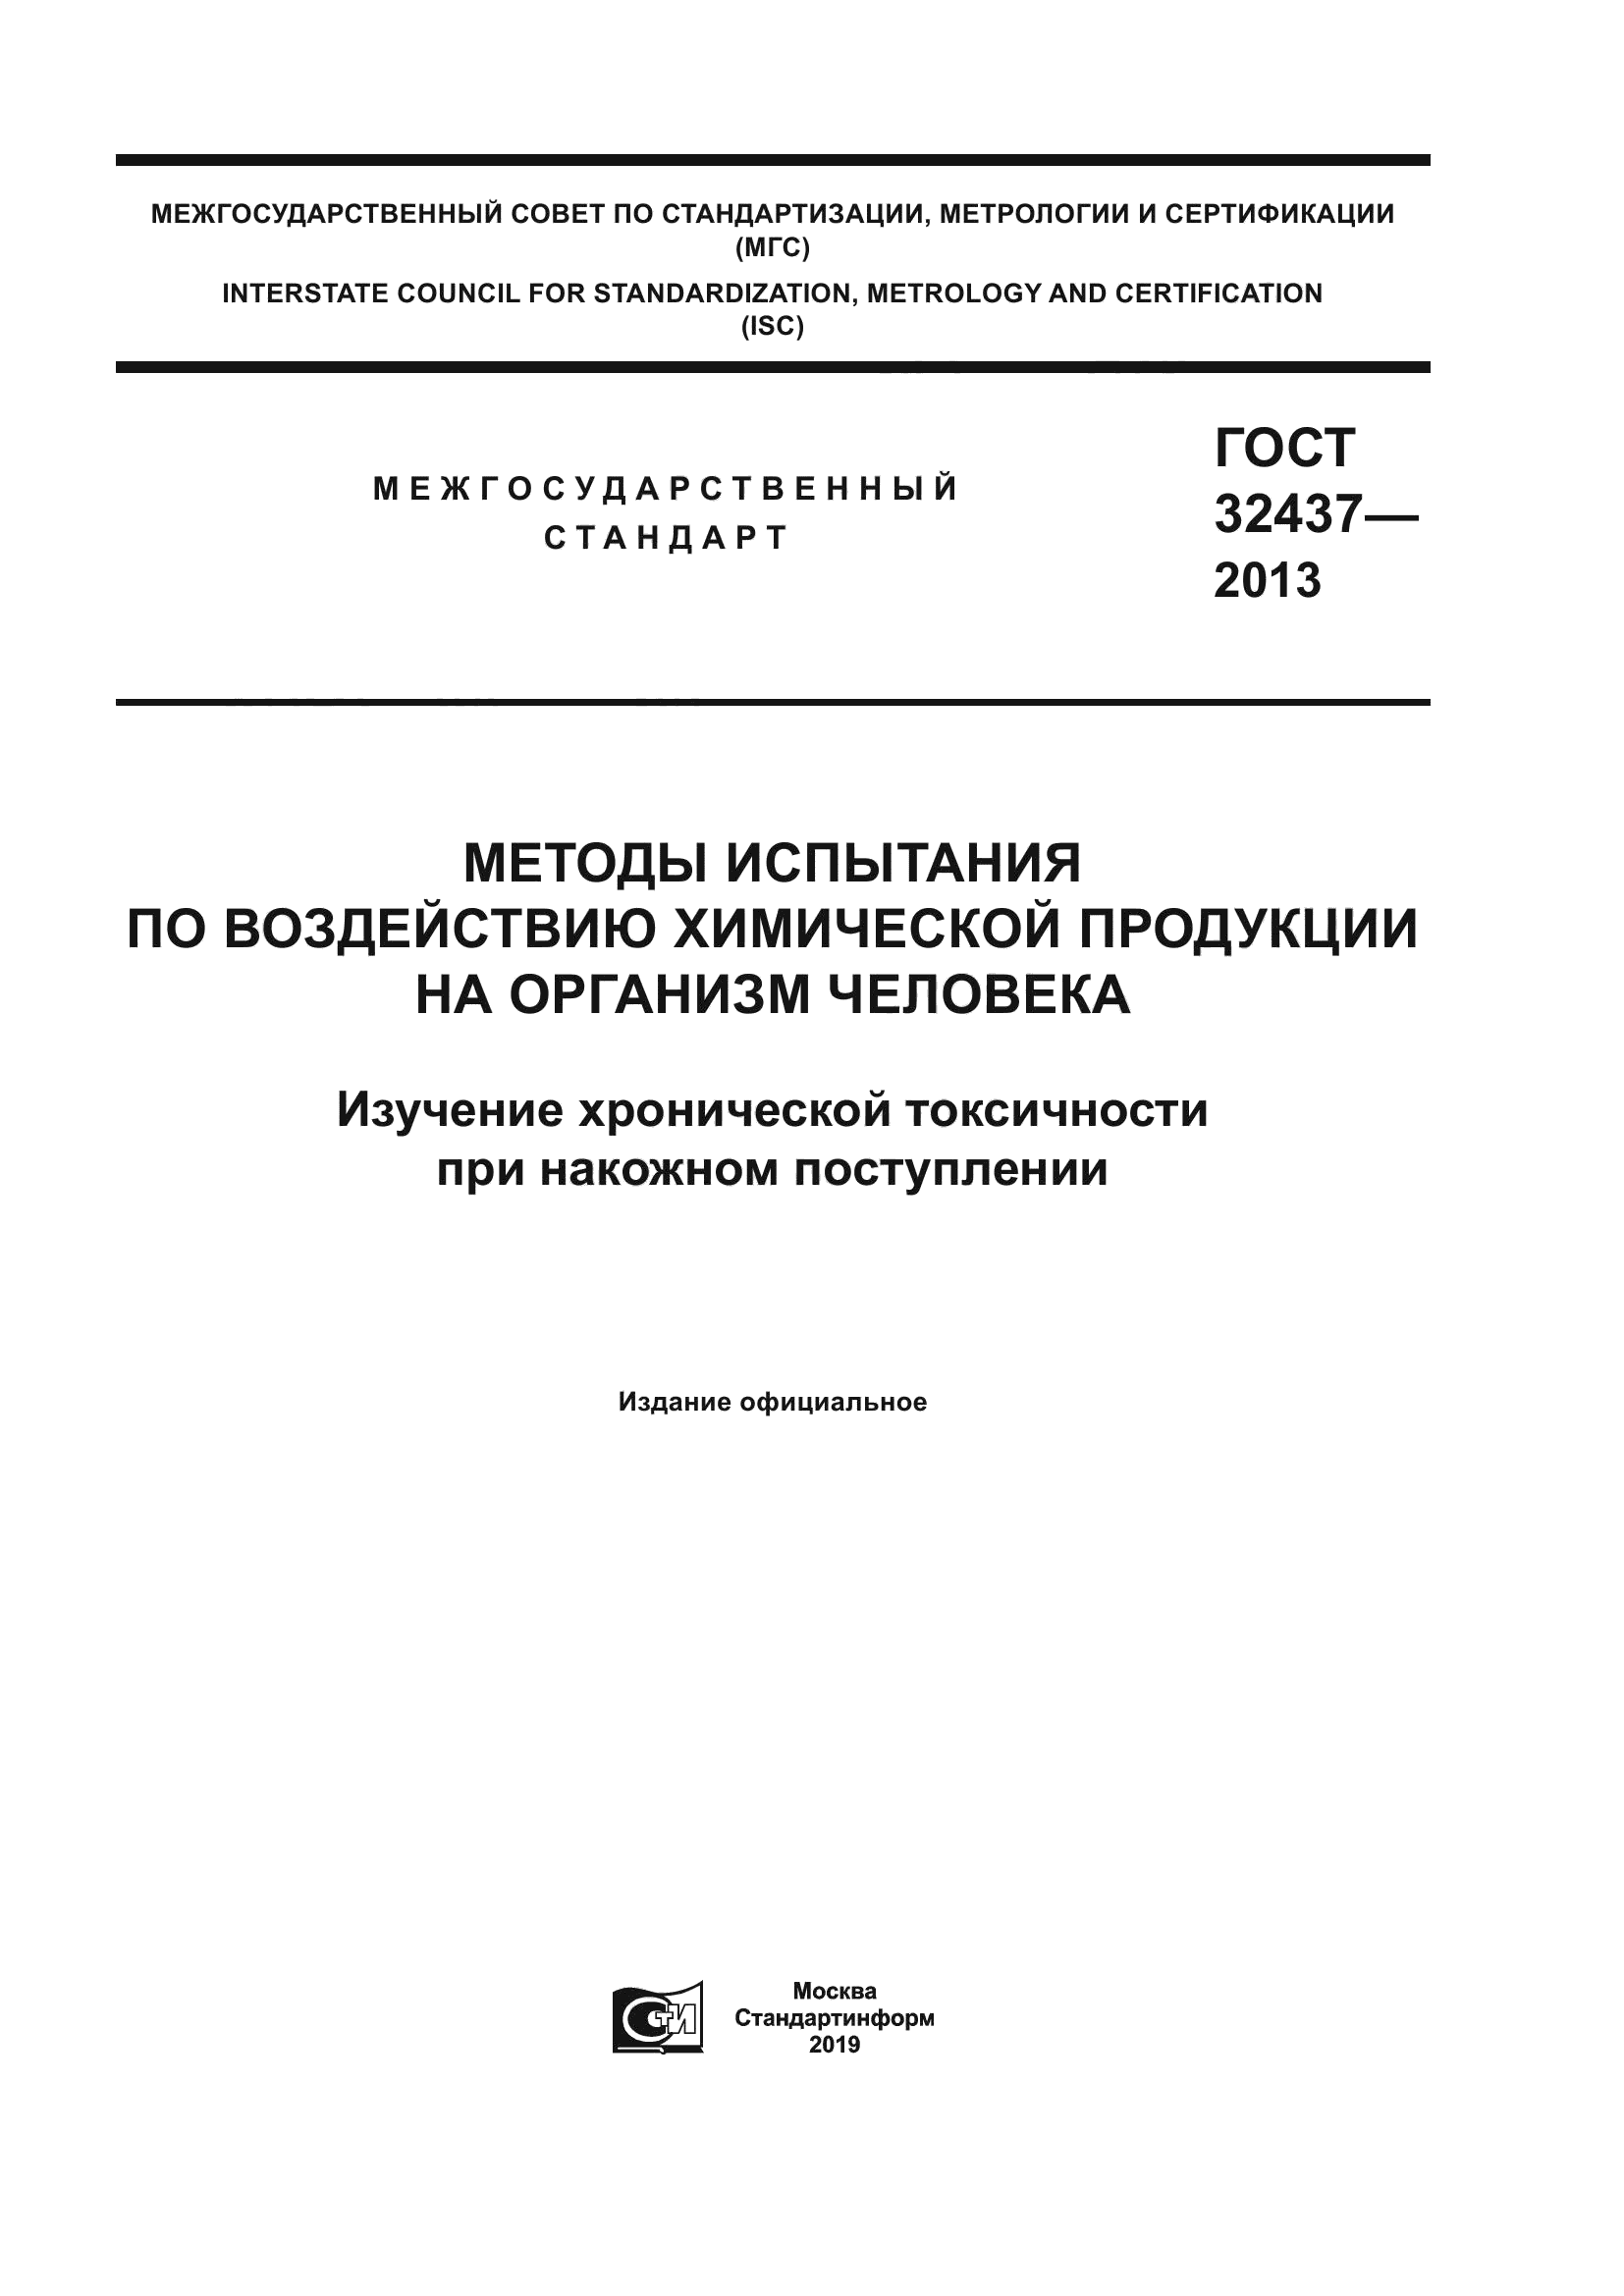 ГОСТ 32437-2013